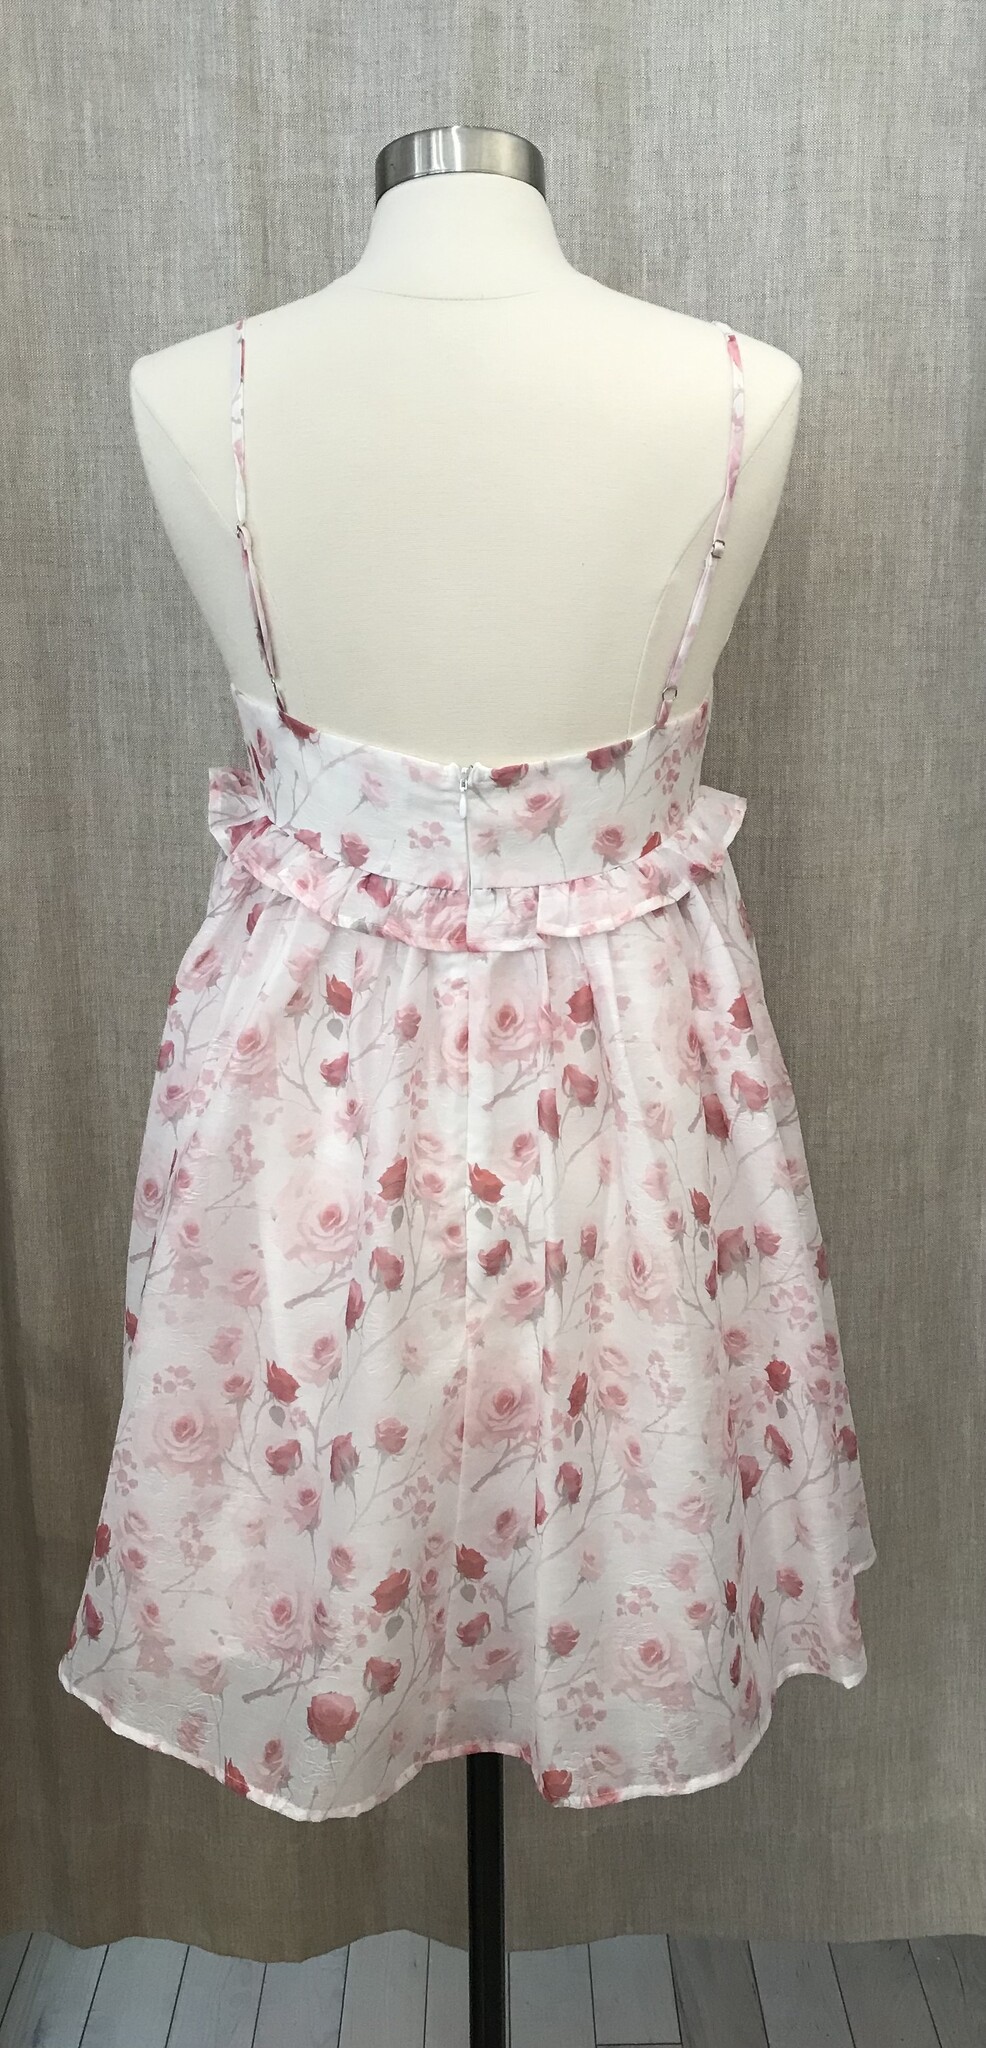 Storia "Feeling Rosie" Printed Babydoll Mini Dress